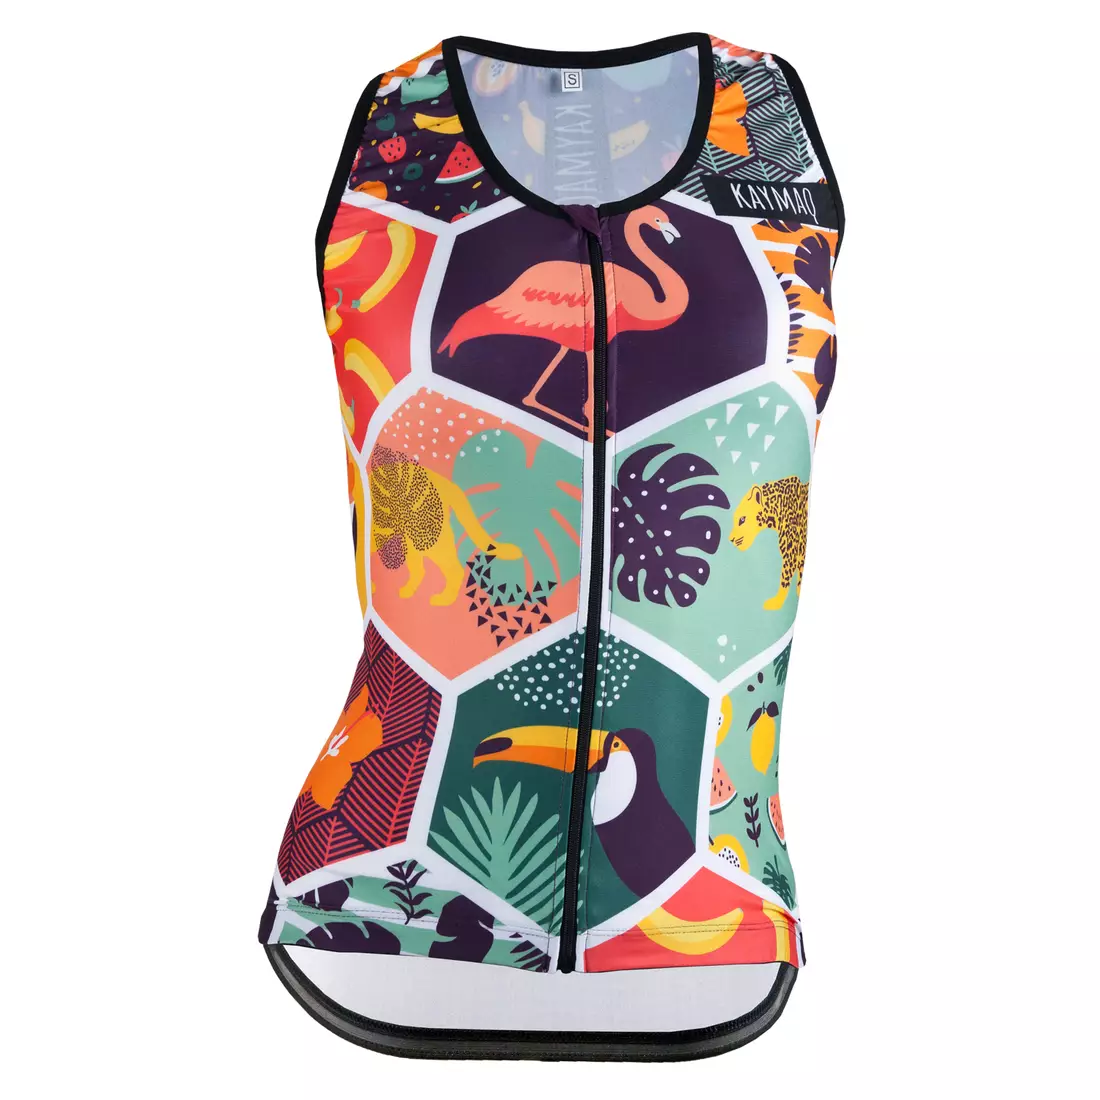 KAYMAQ DESIGN W21 women's sleeveless cycling t-shirt